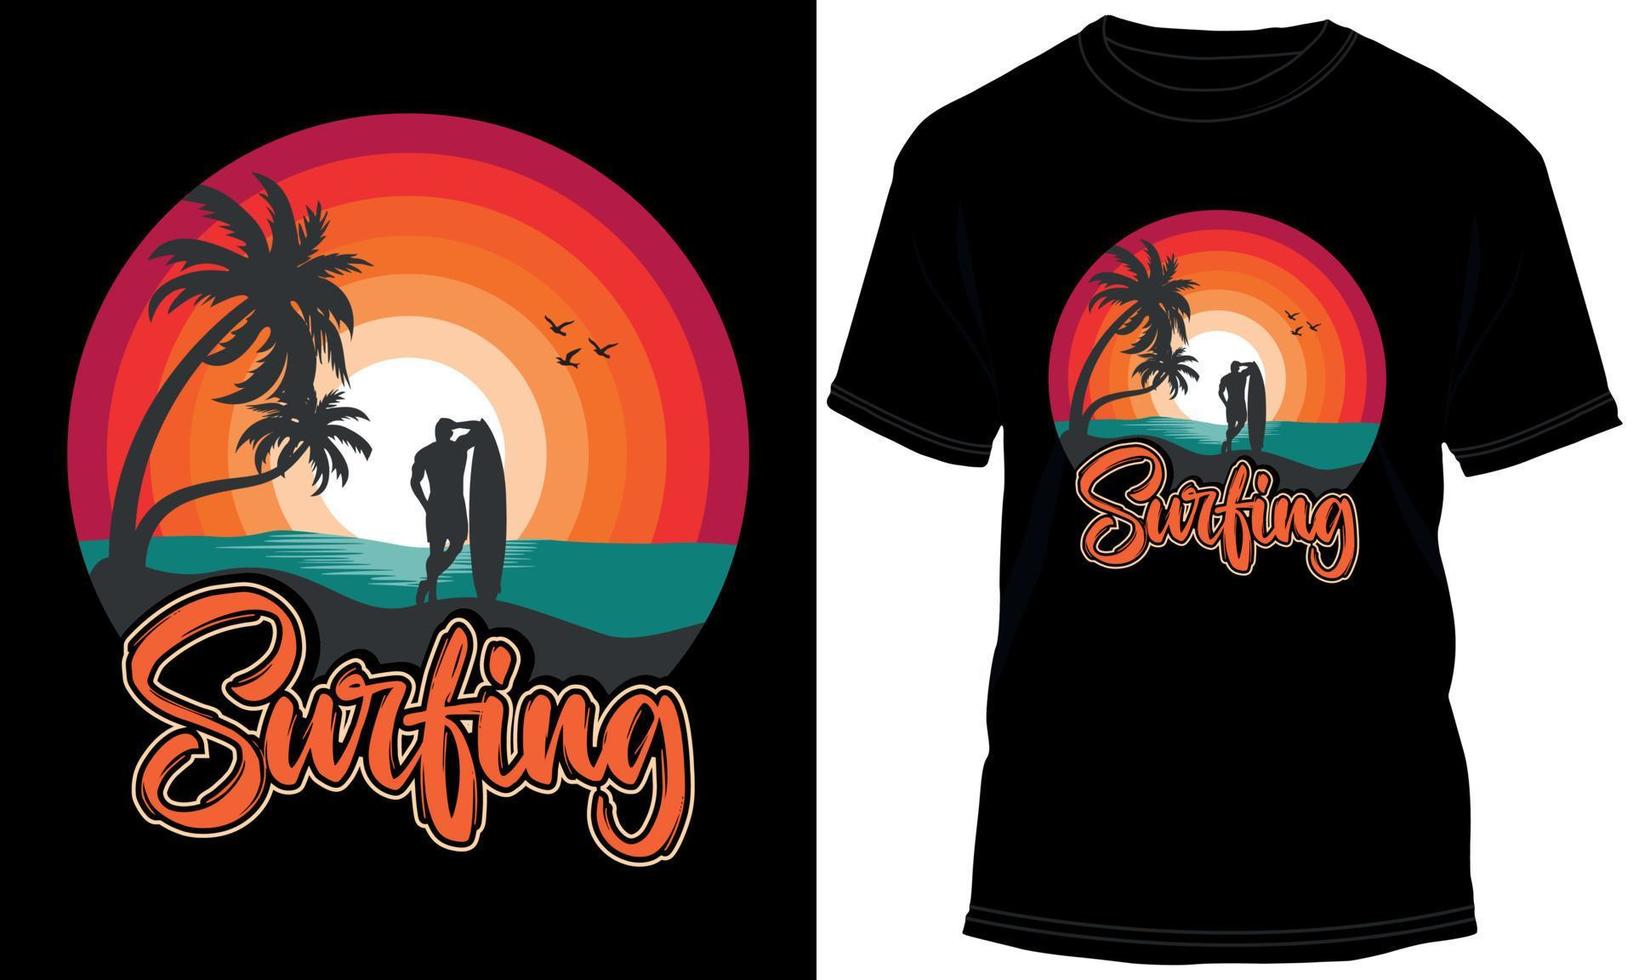 Surfing Colourful VIntage T-shirt Design vector